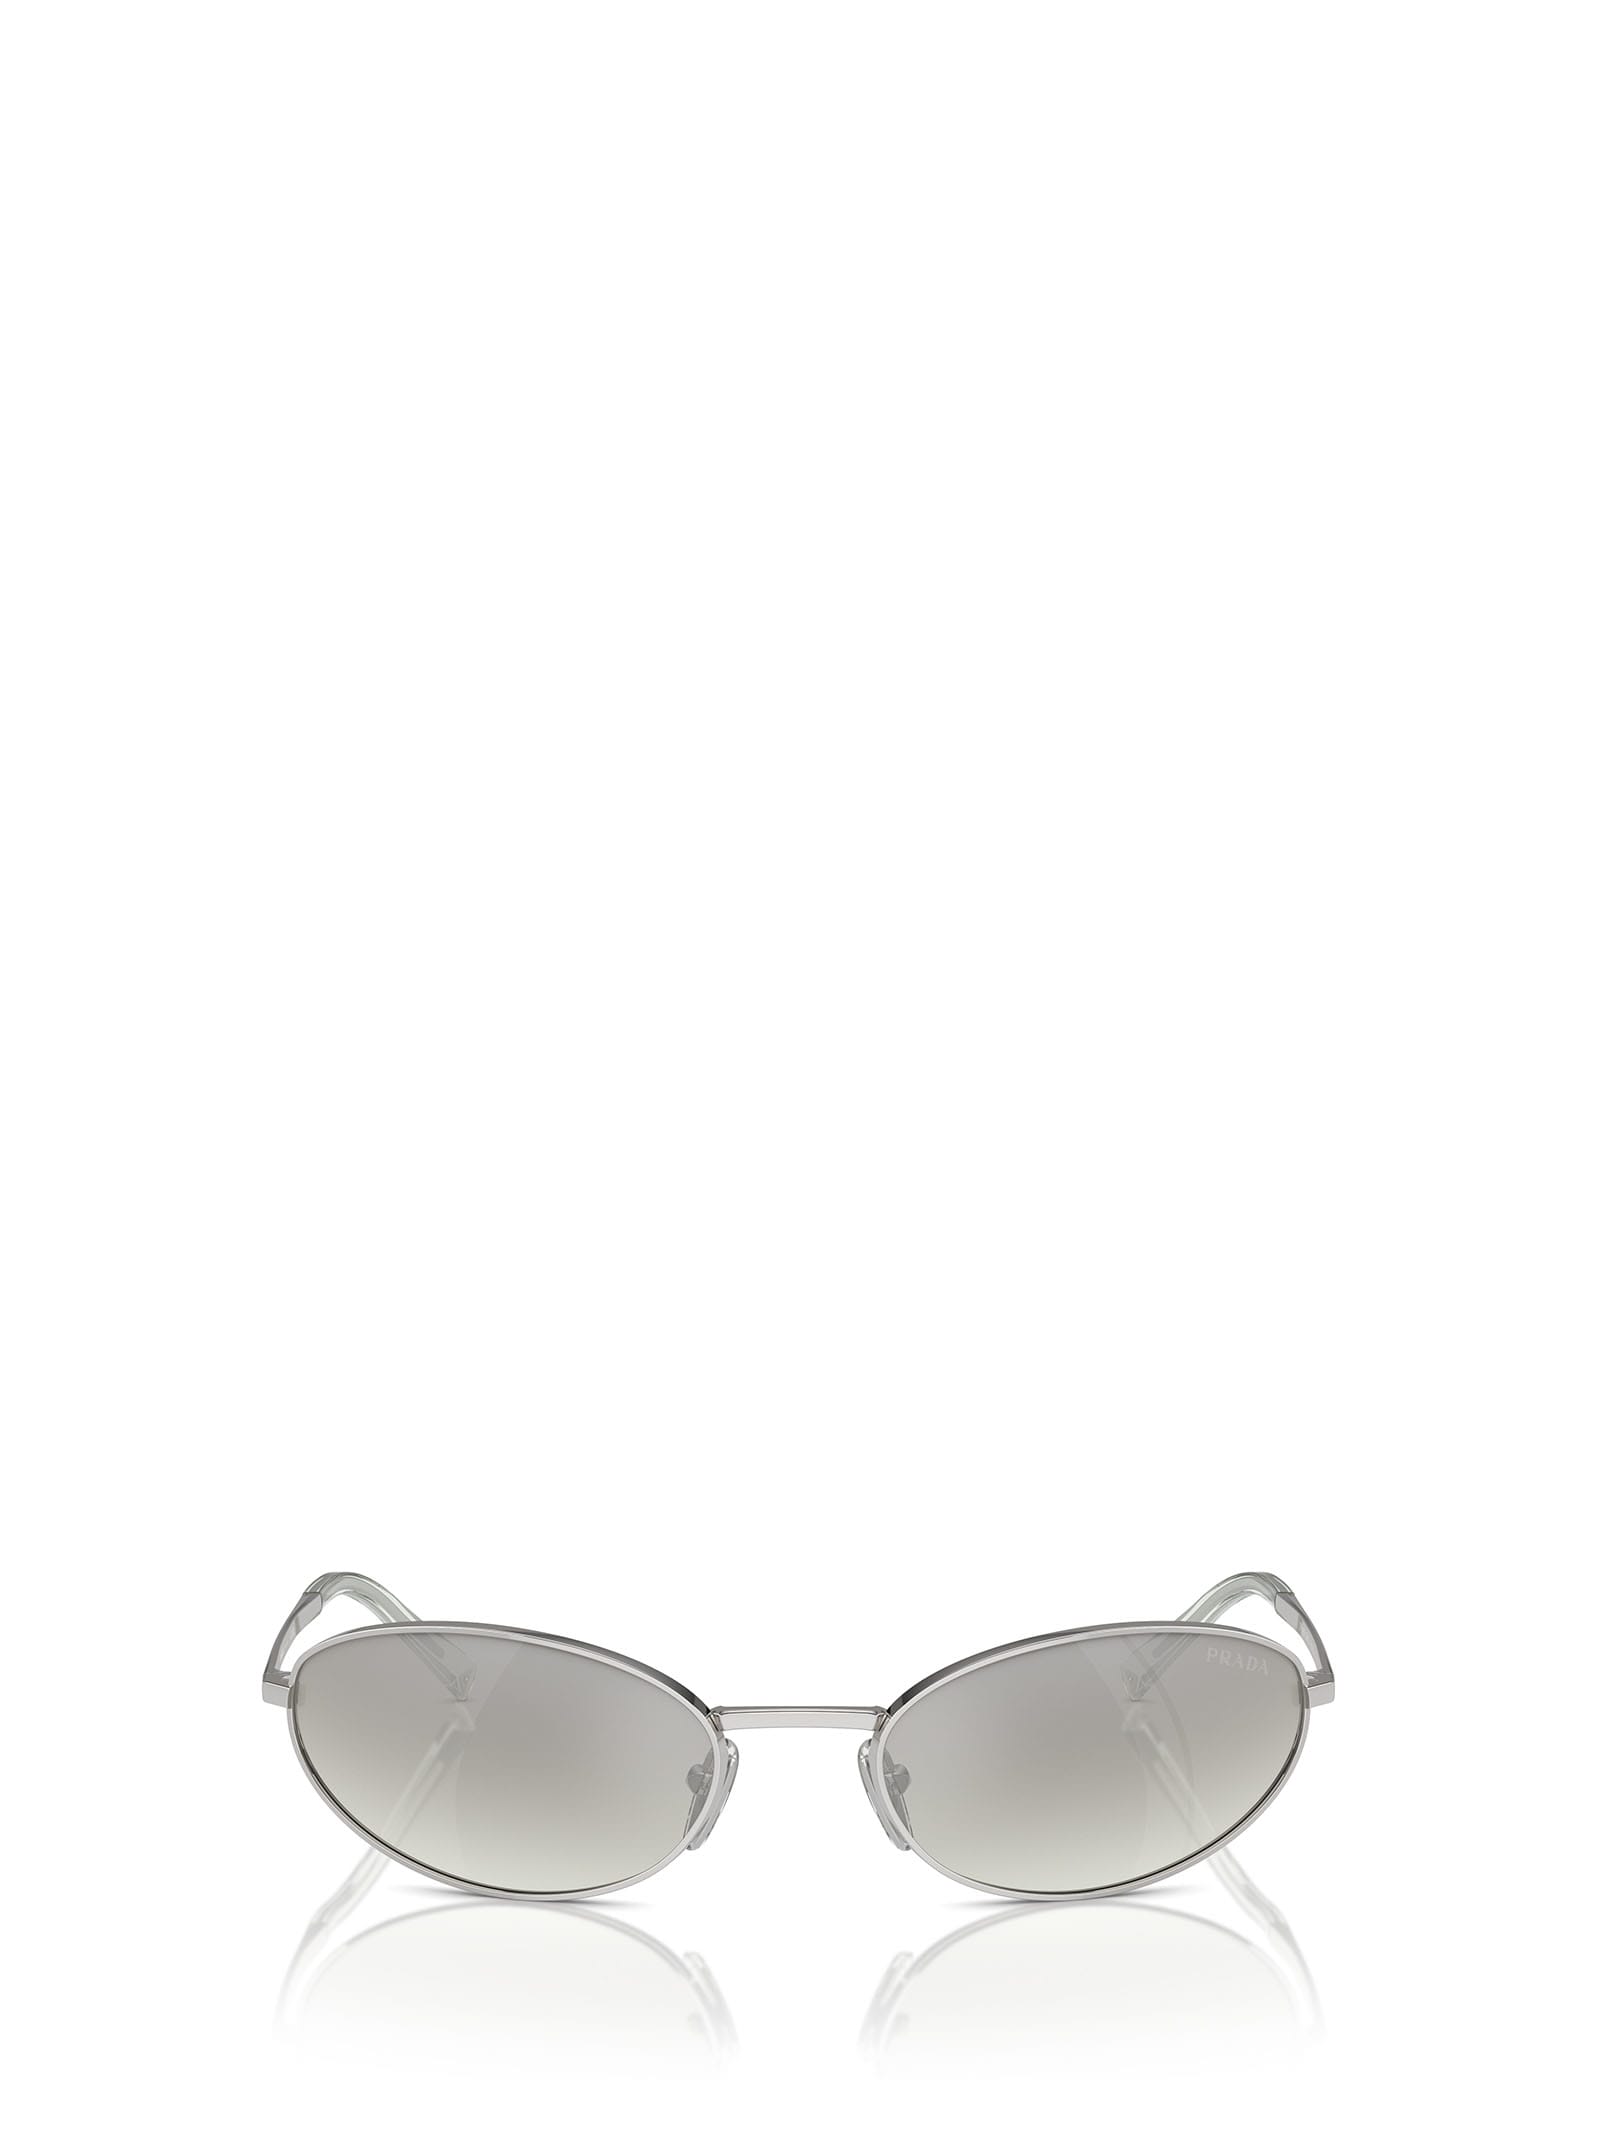 Prada Pr A59s Silver Sunglasses In Metallic